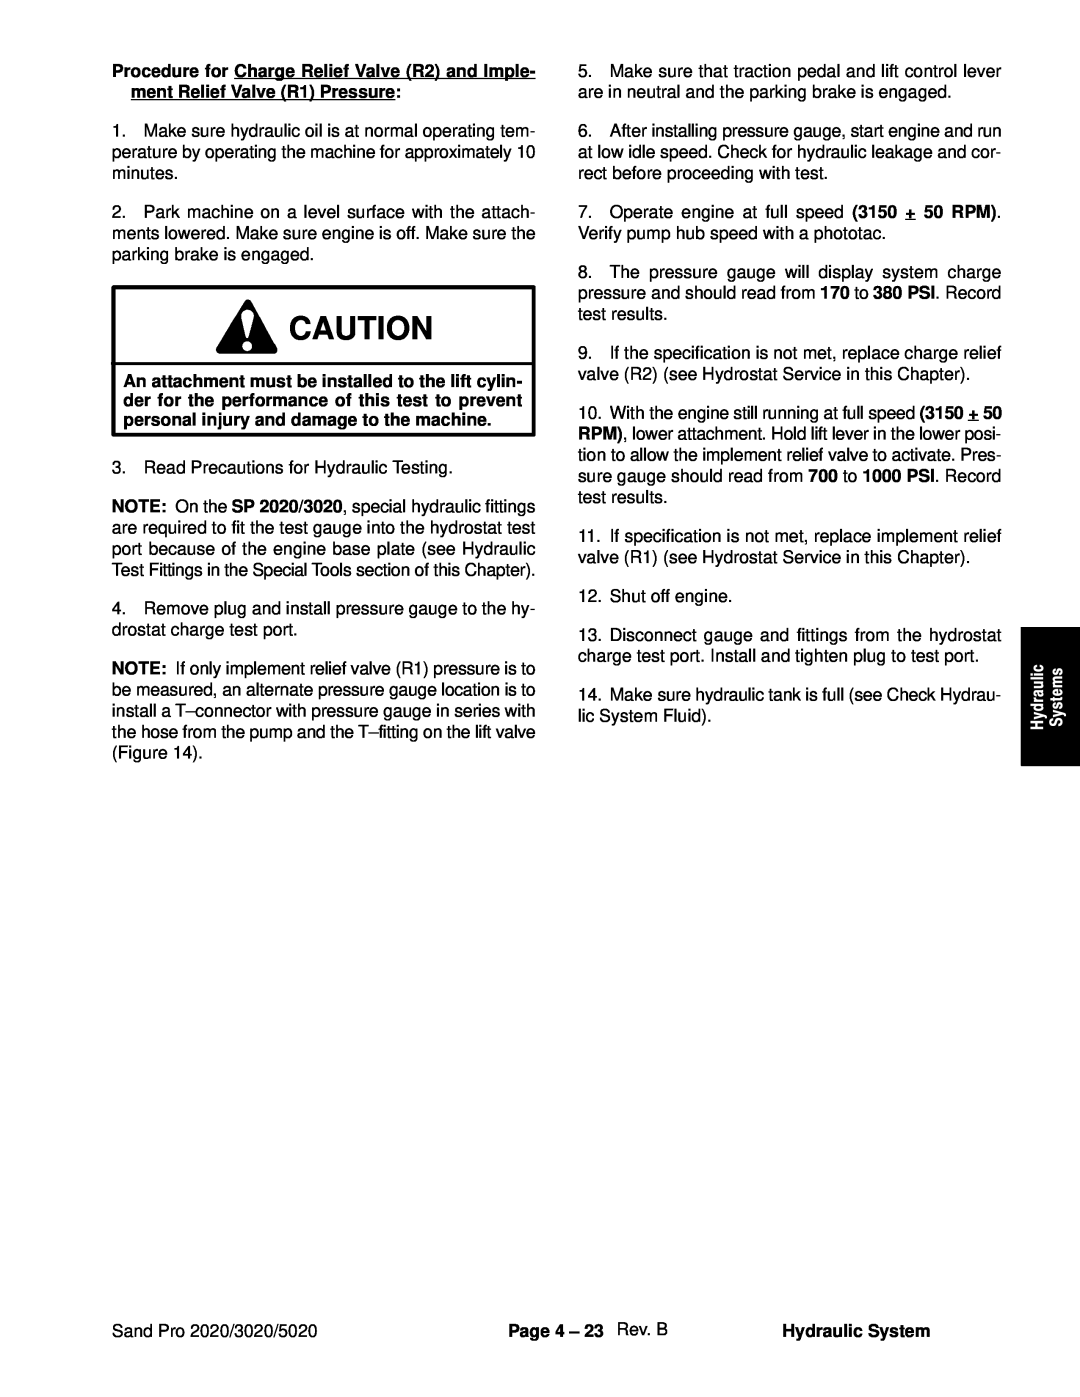 Toro 2020, 5020, 3020 service manual Systems, Page 4 - 23 Rev. B, Hydraulic System Rev. A 